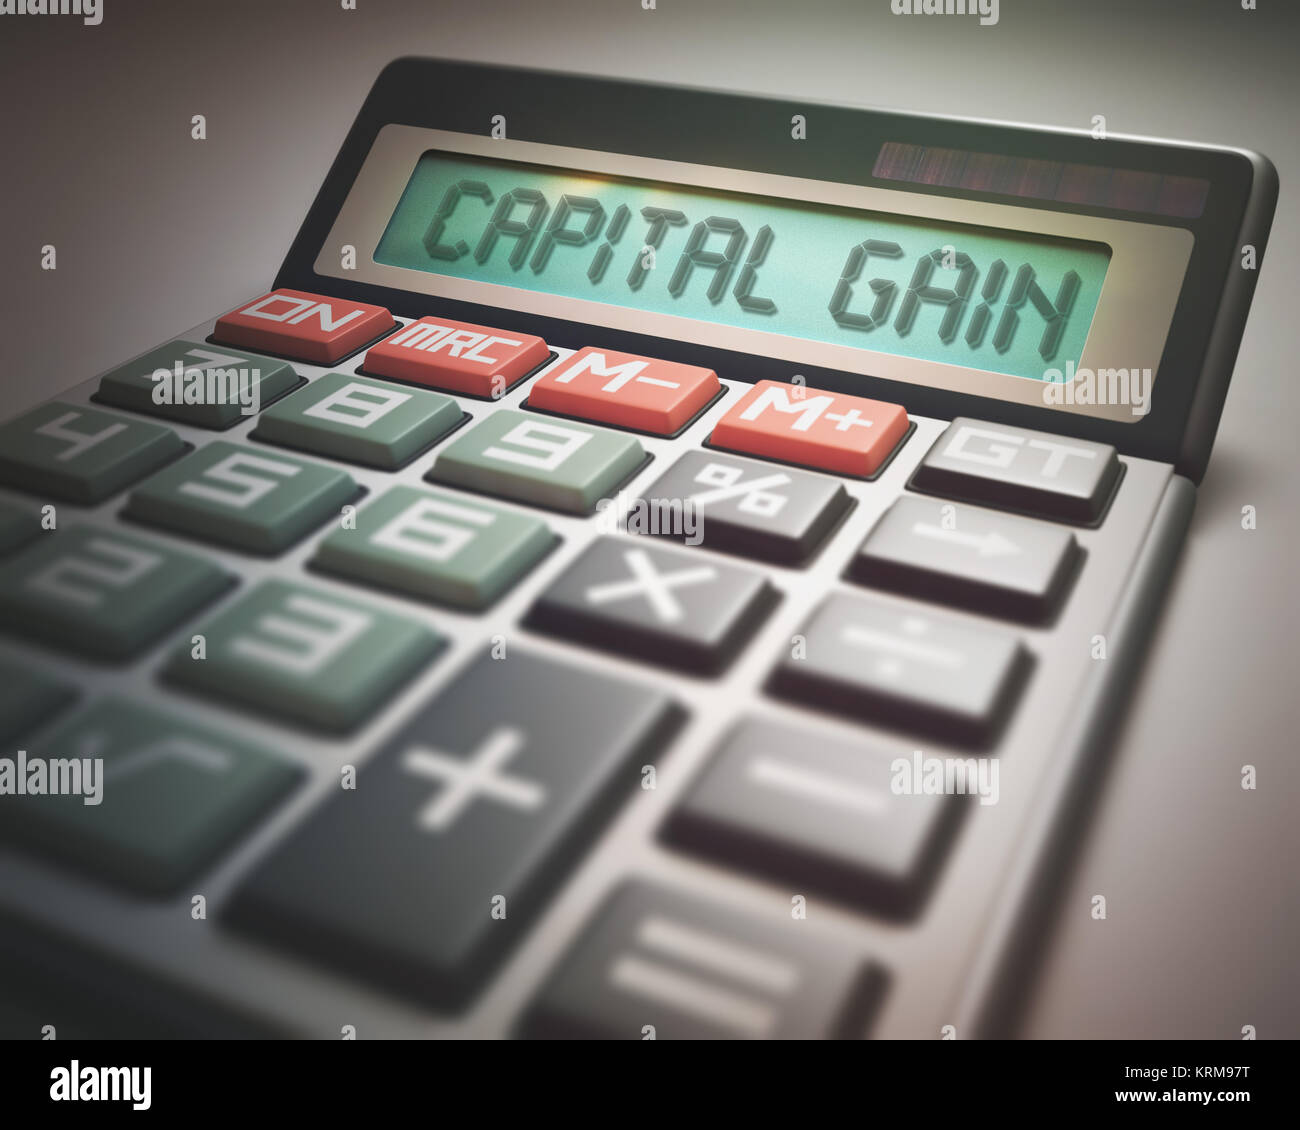 Capital Gain Calculator Stock Photo